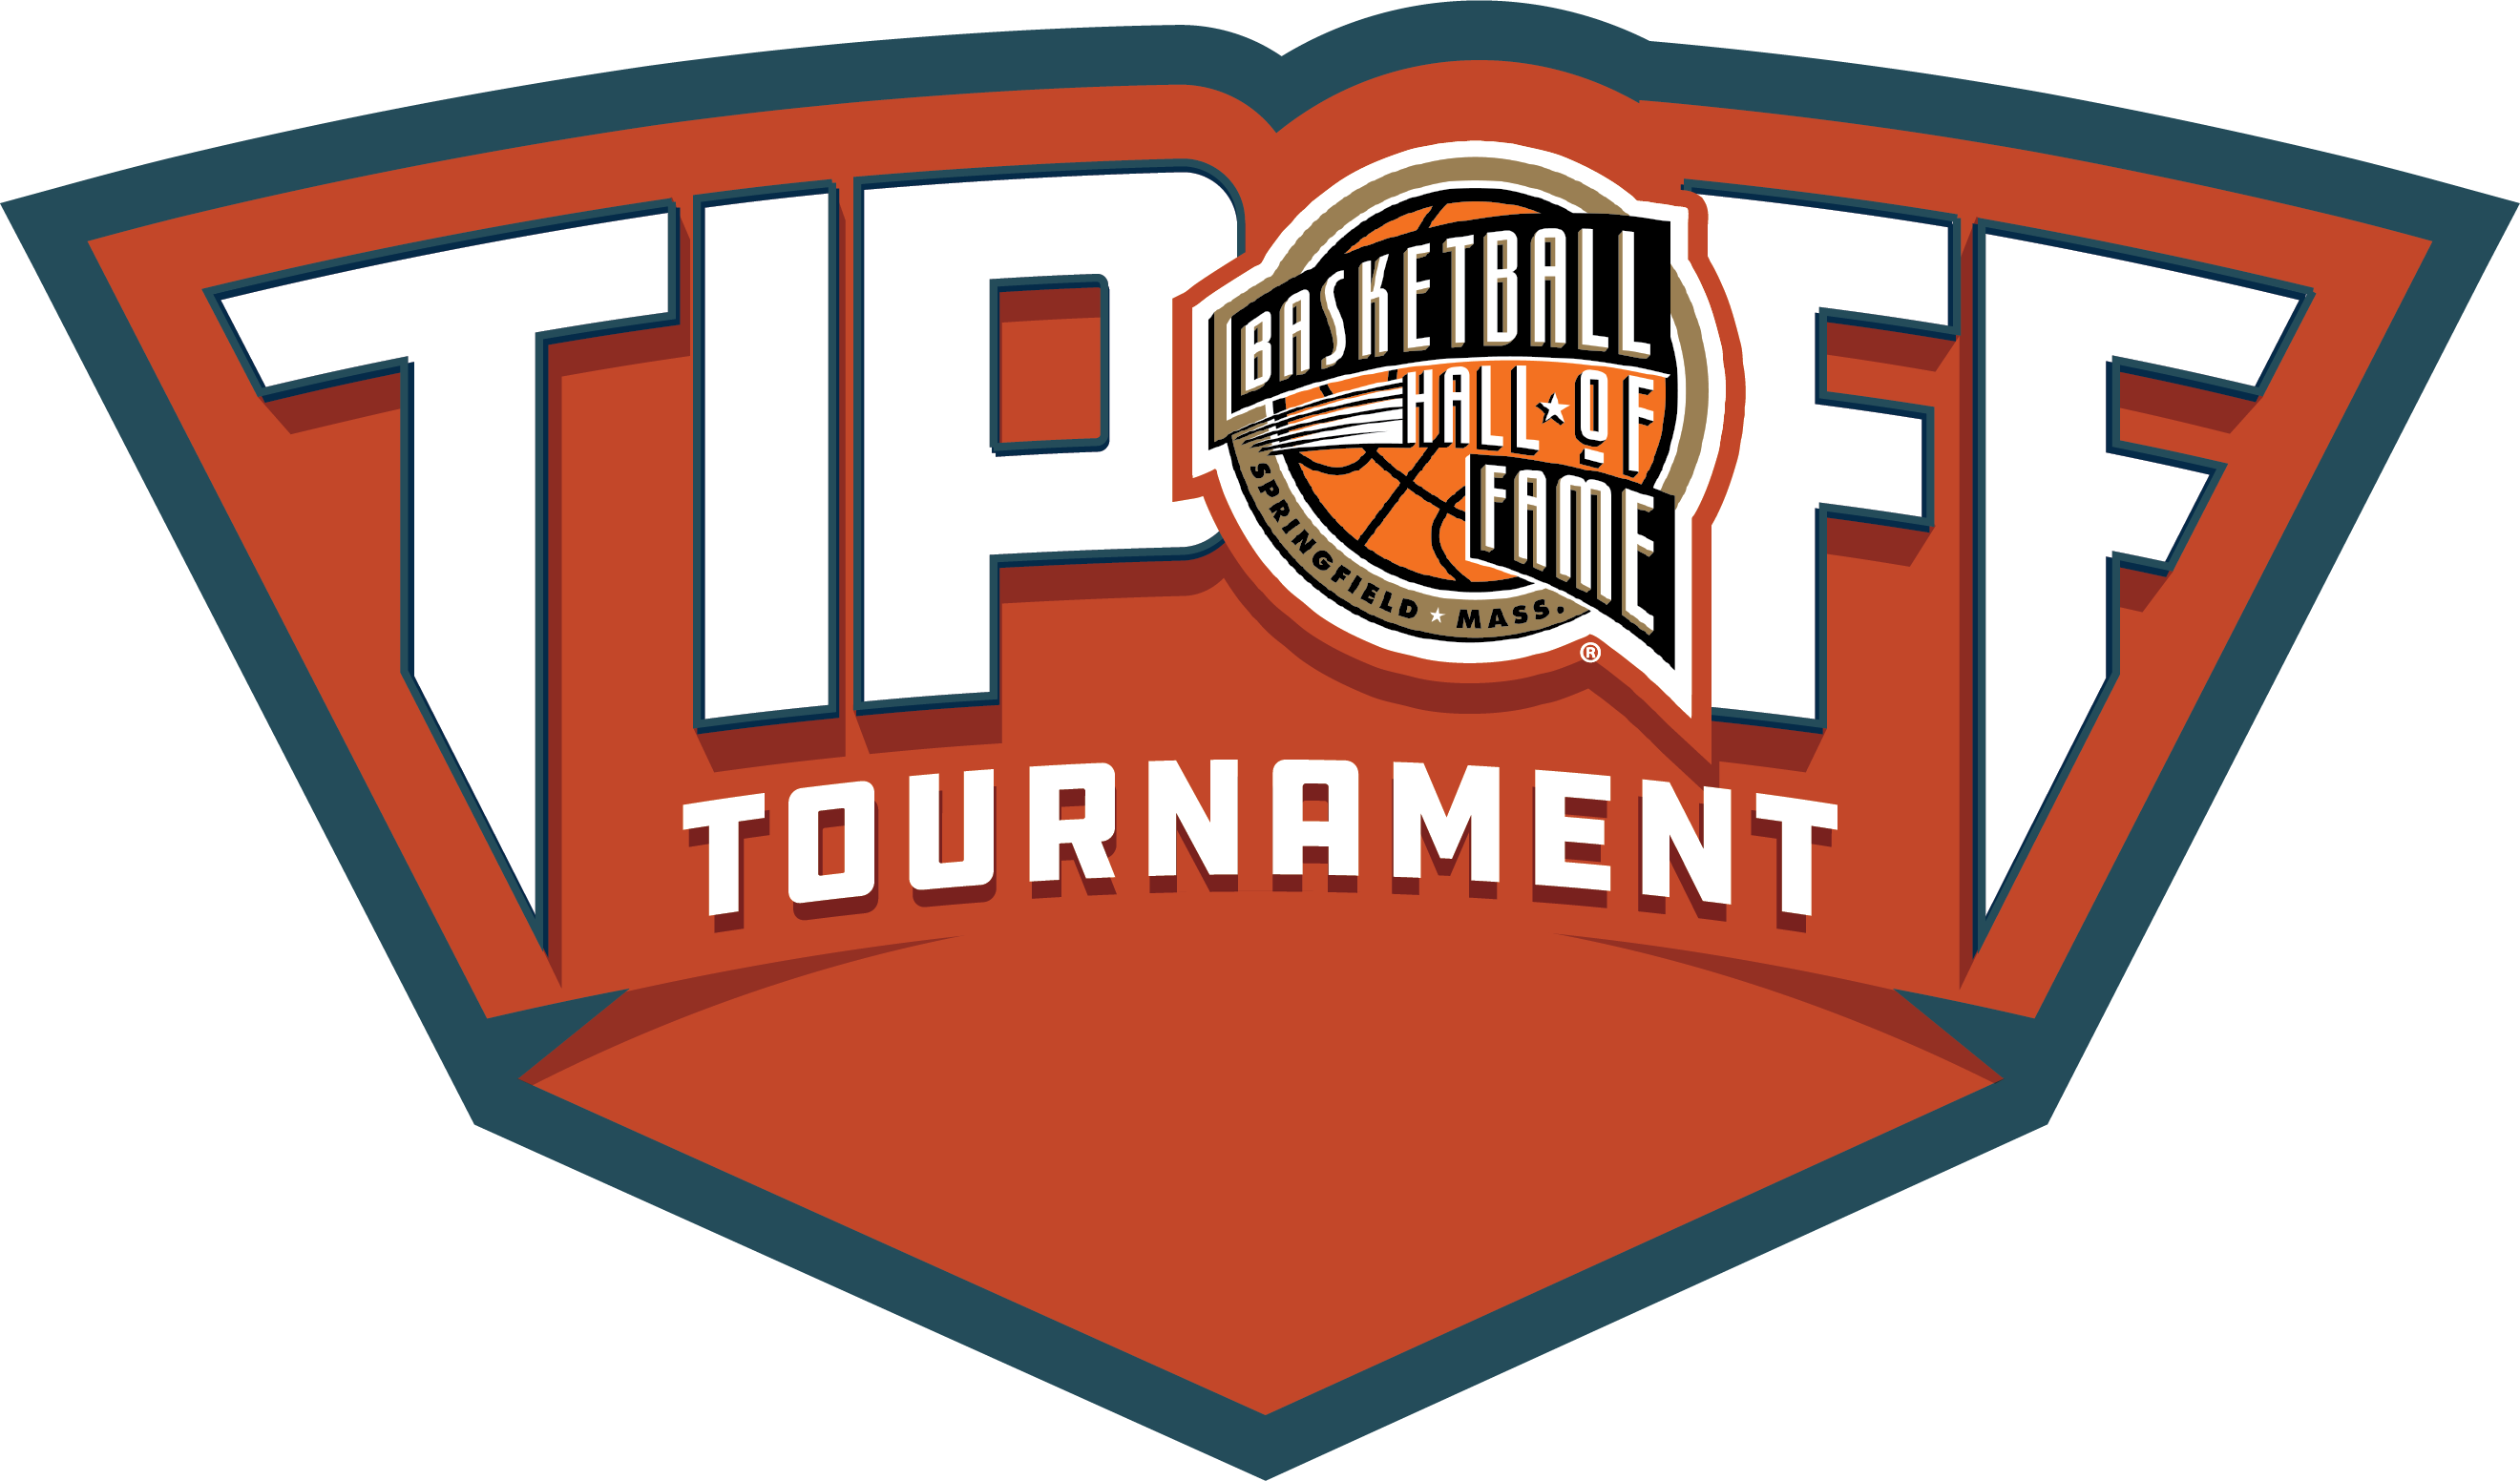 Hall of Fame TipOff Tournament